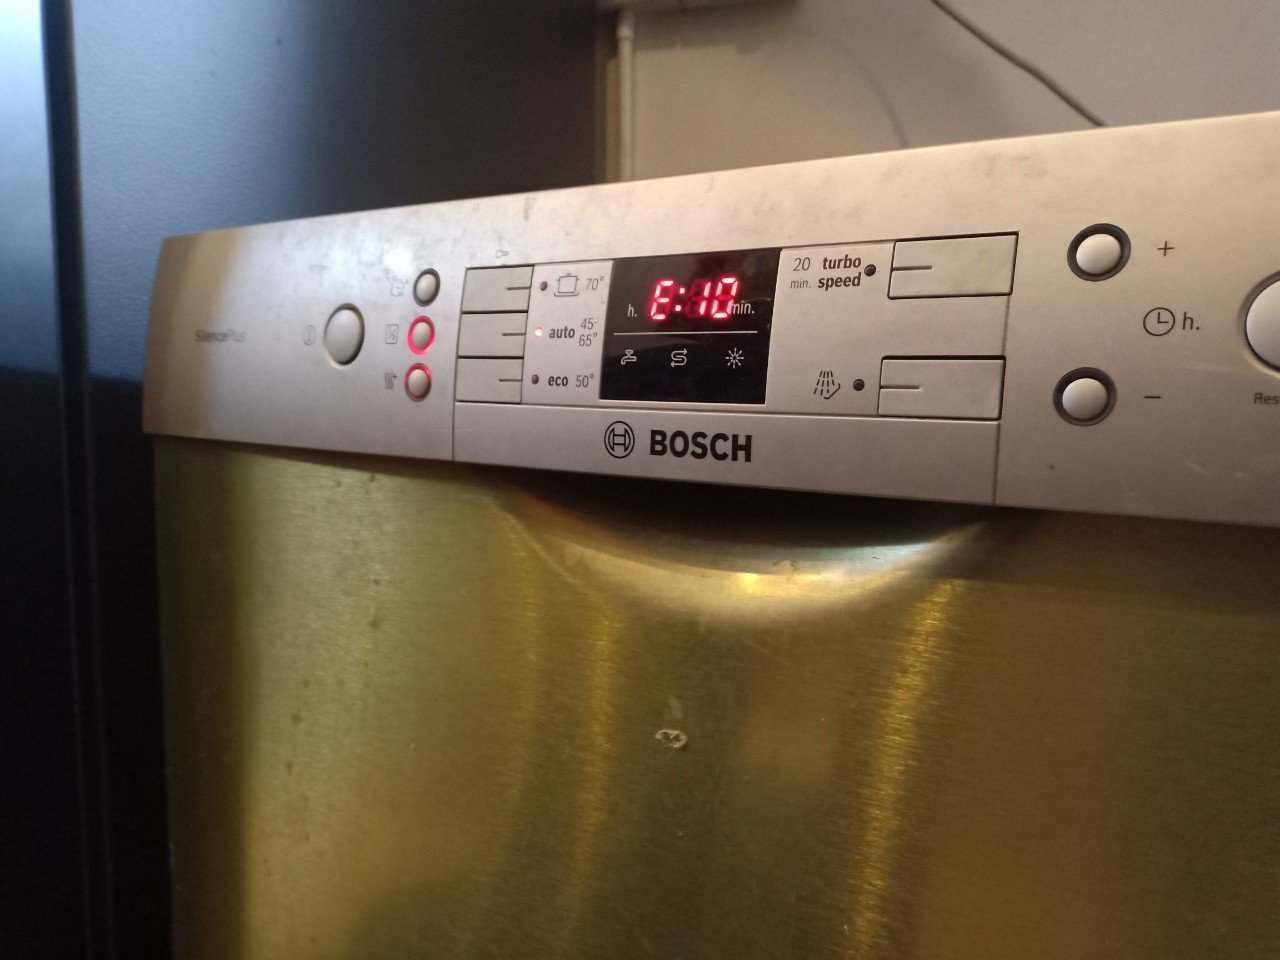 Sửa máy rửa bát Bosch báo lỗi E10